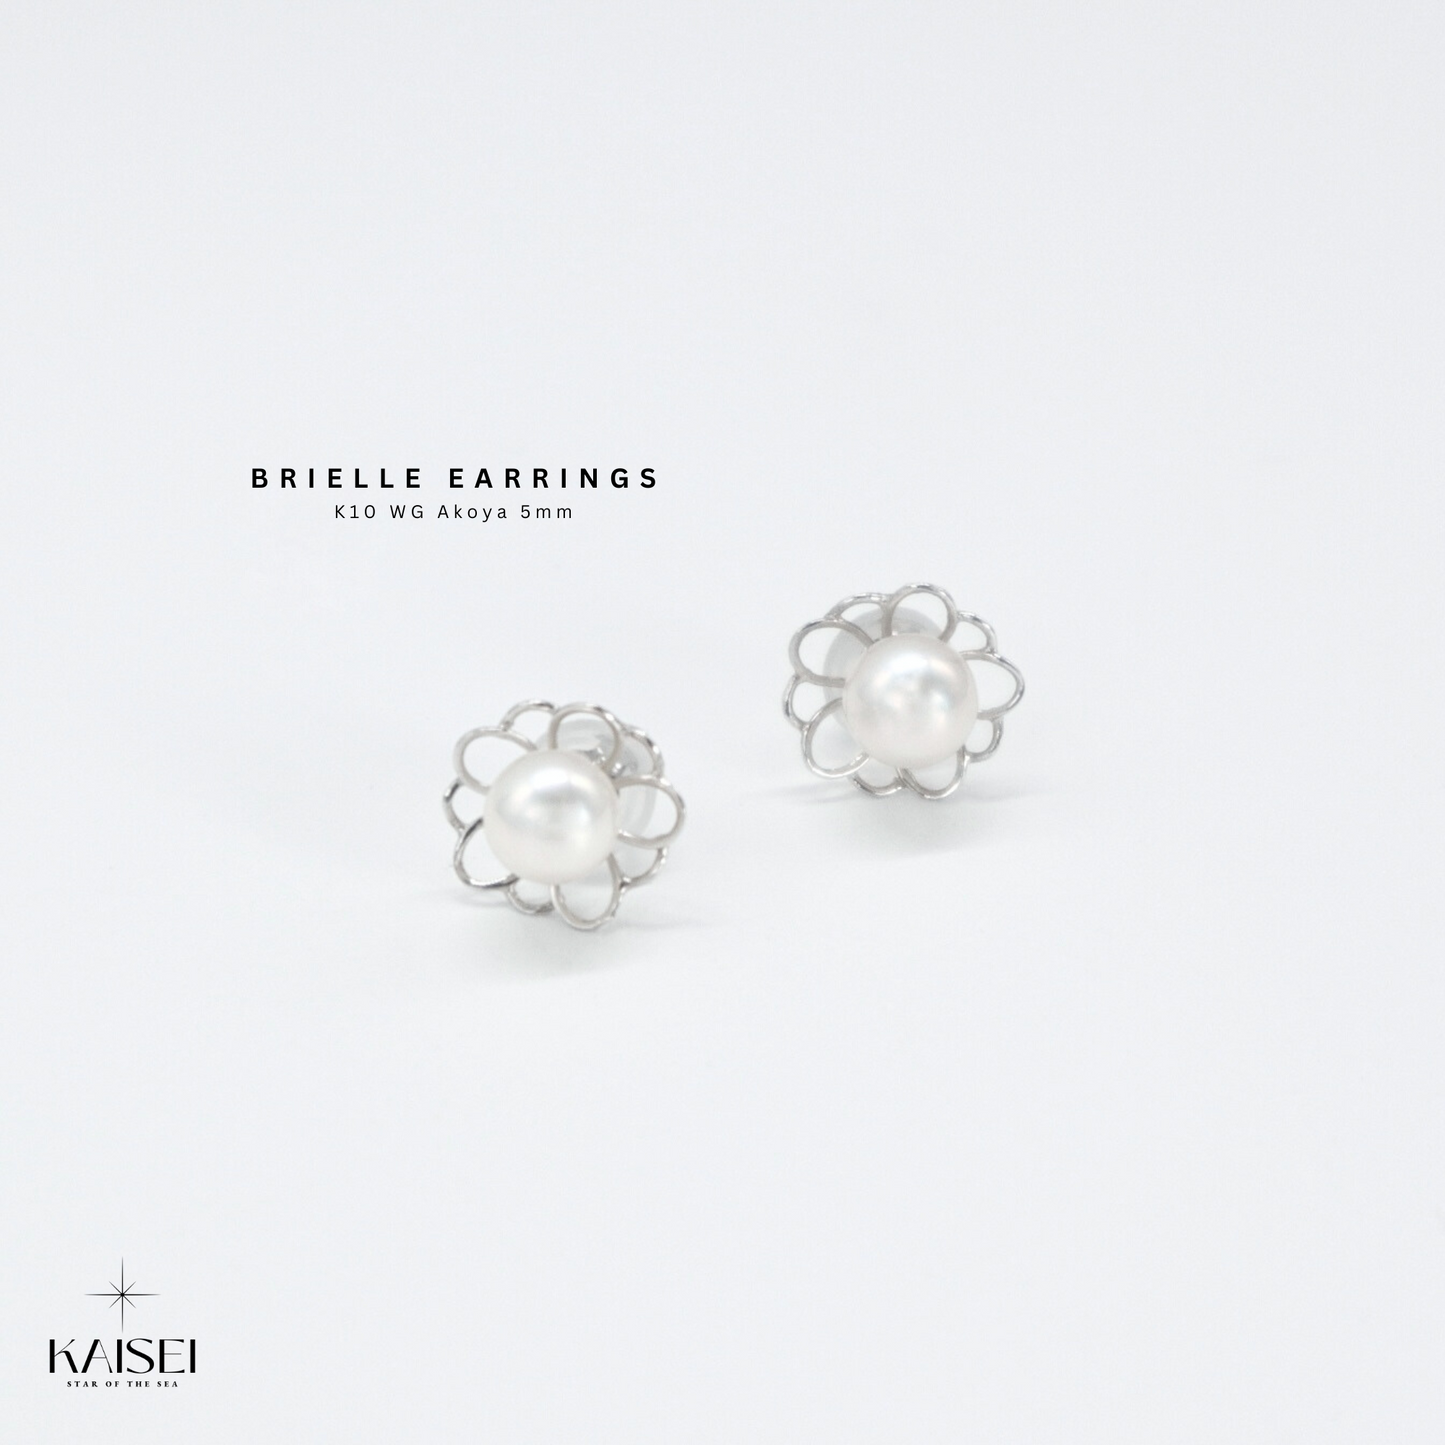 Kaisei Pearl - Brielle Earrings K10 White Gold Akoya Pearl 5mm Japanese Jewelry